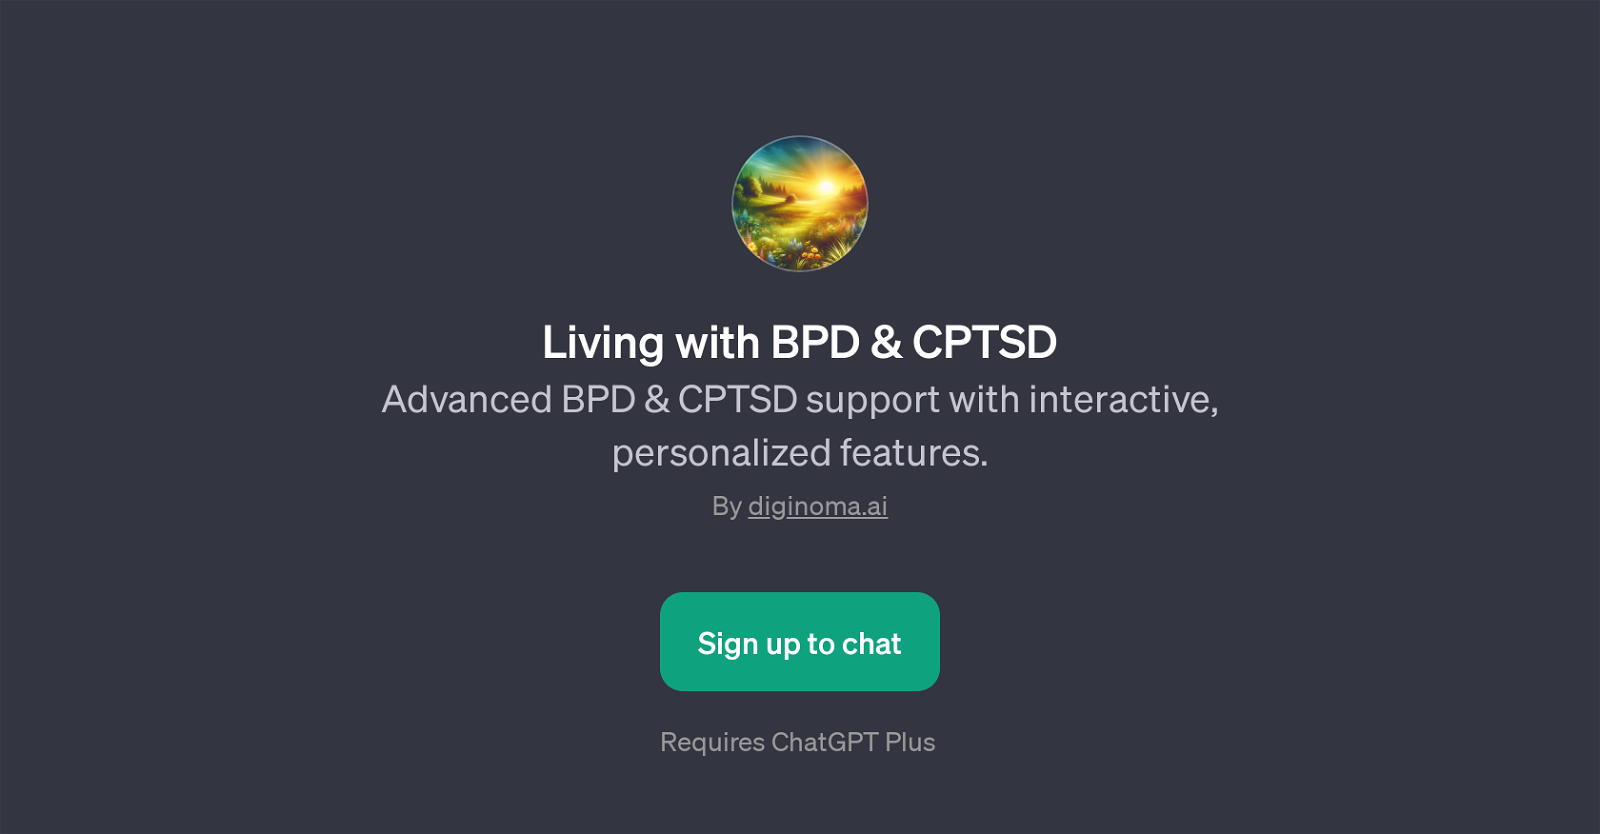 Living with BPD & CPTSD website